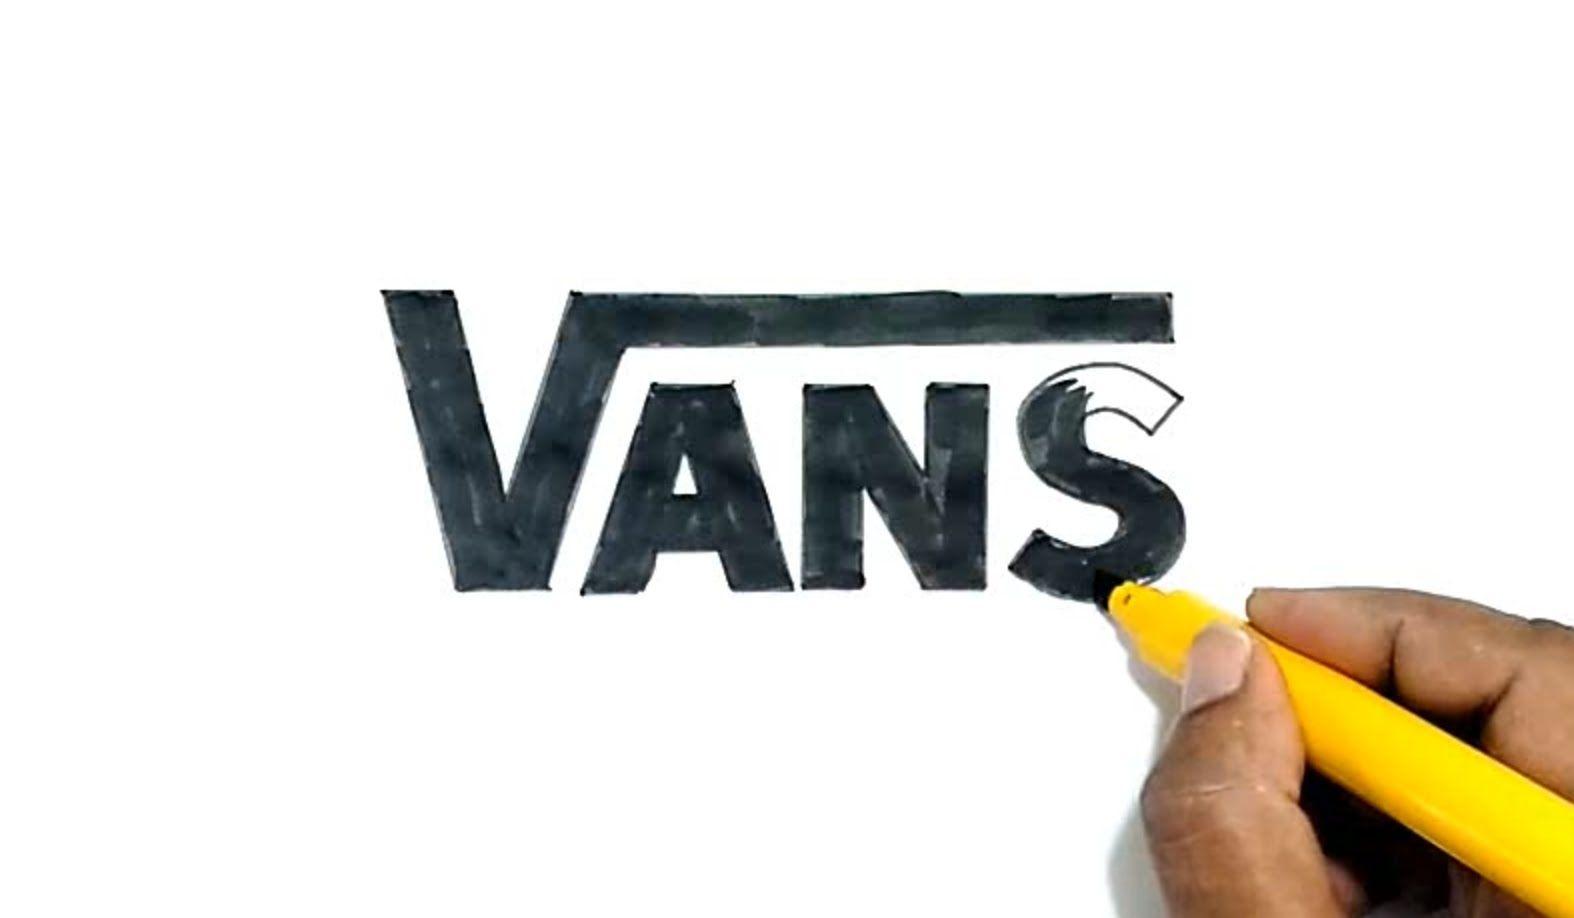 Vanz Logo - How to Draw the Vans Logo - YouTube